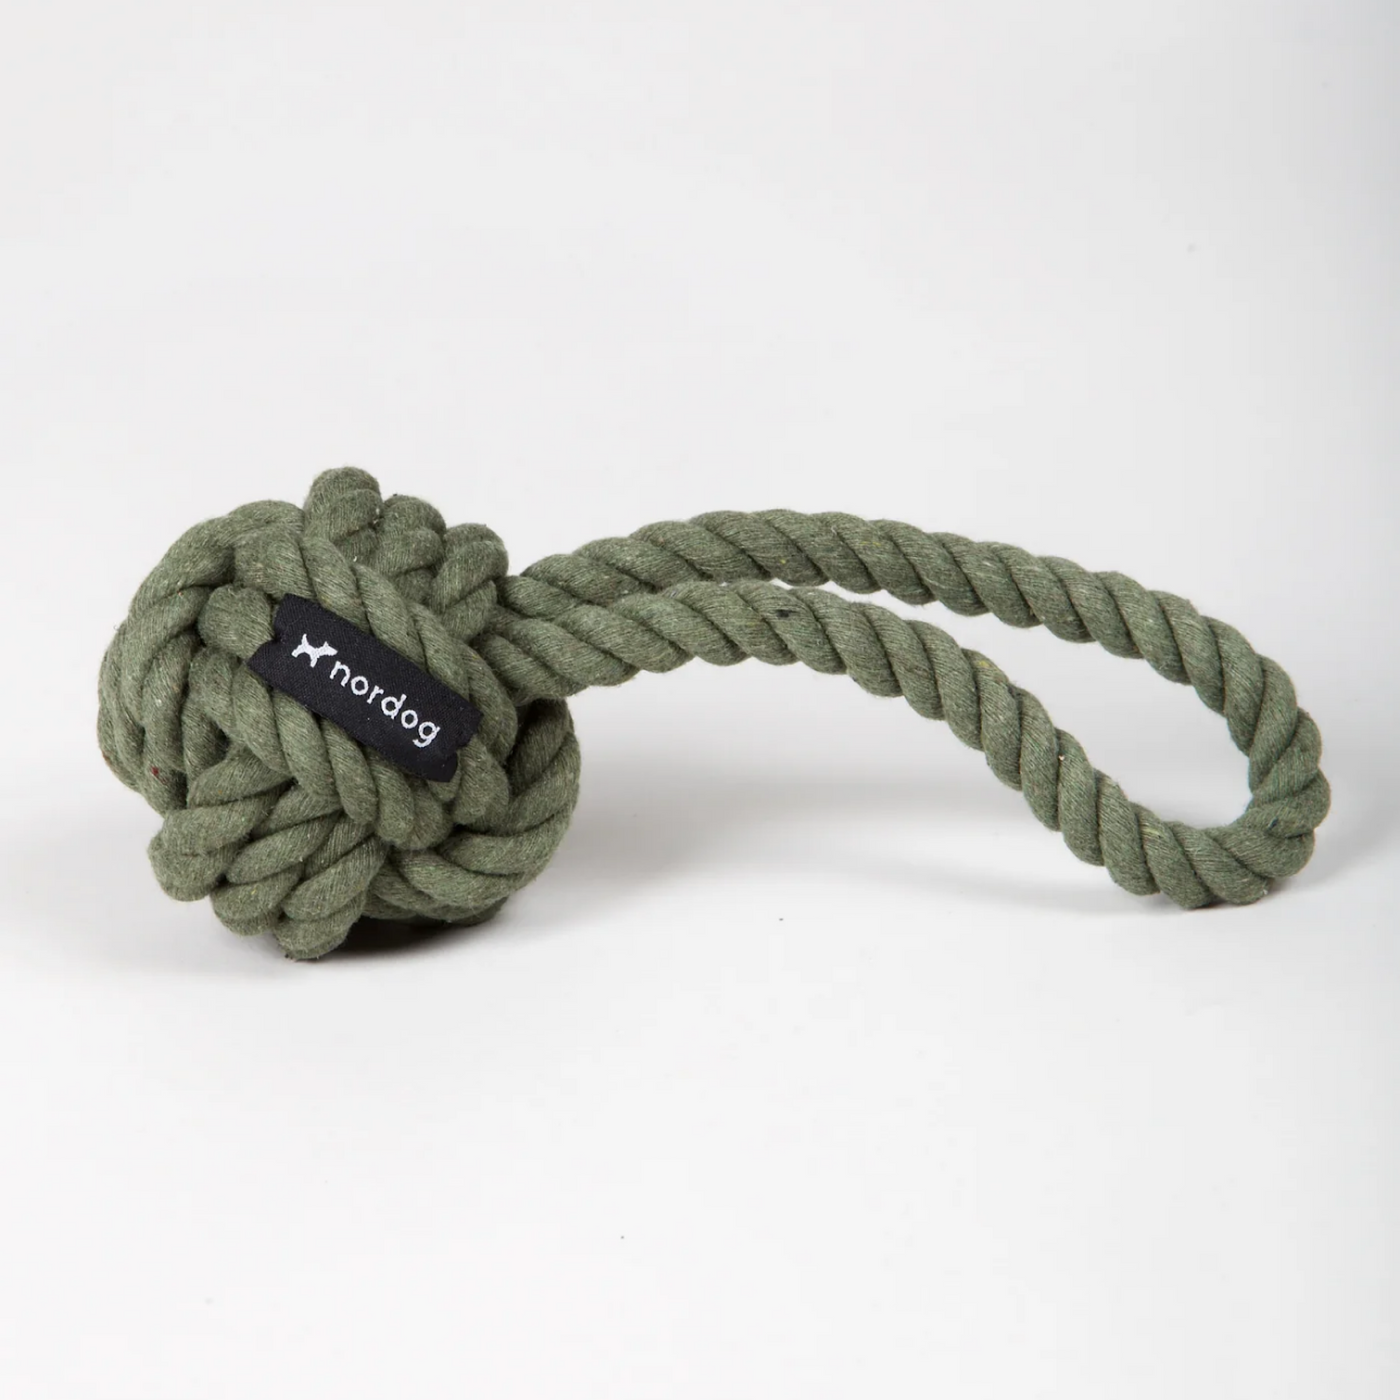 Nordog - Original Seil Spielzeug